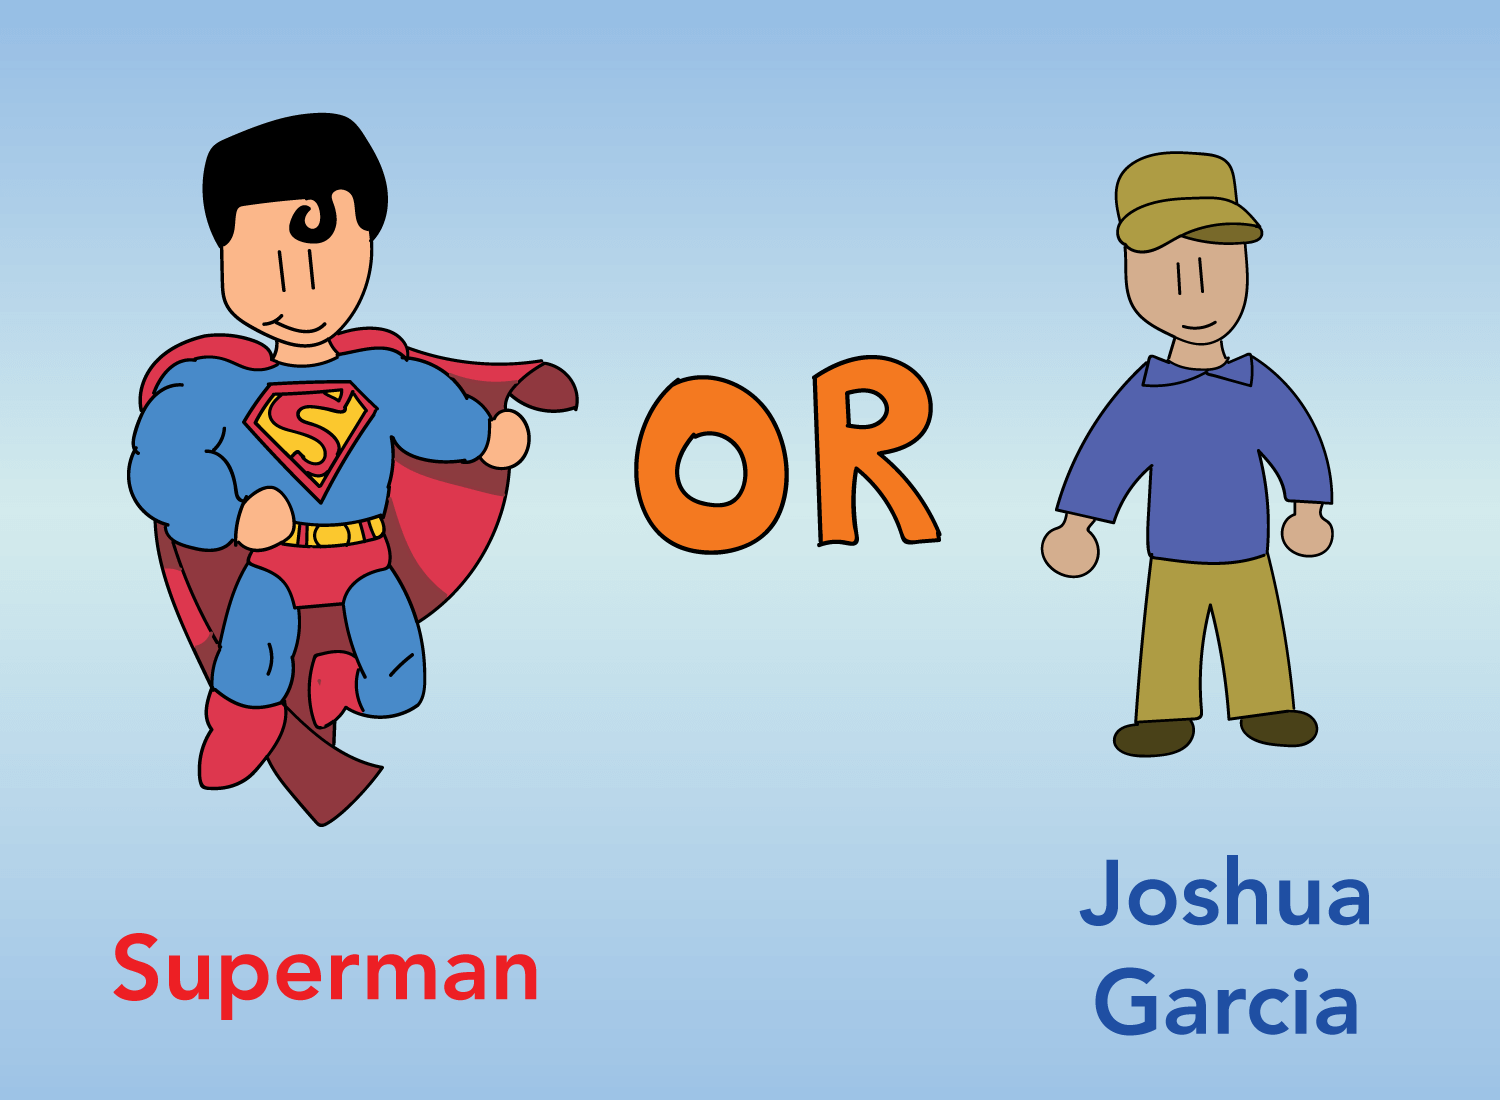 superman or joshua garcia